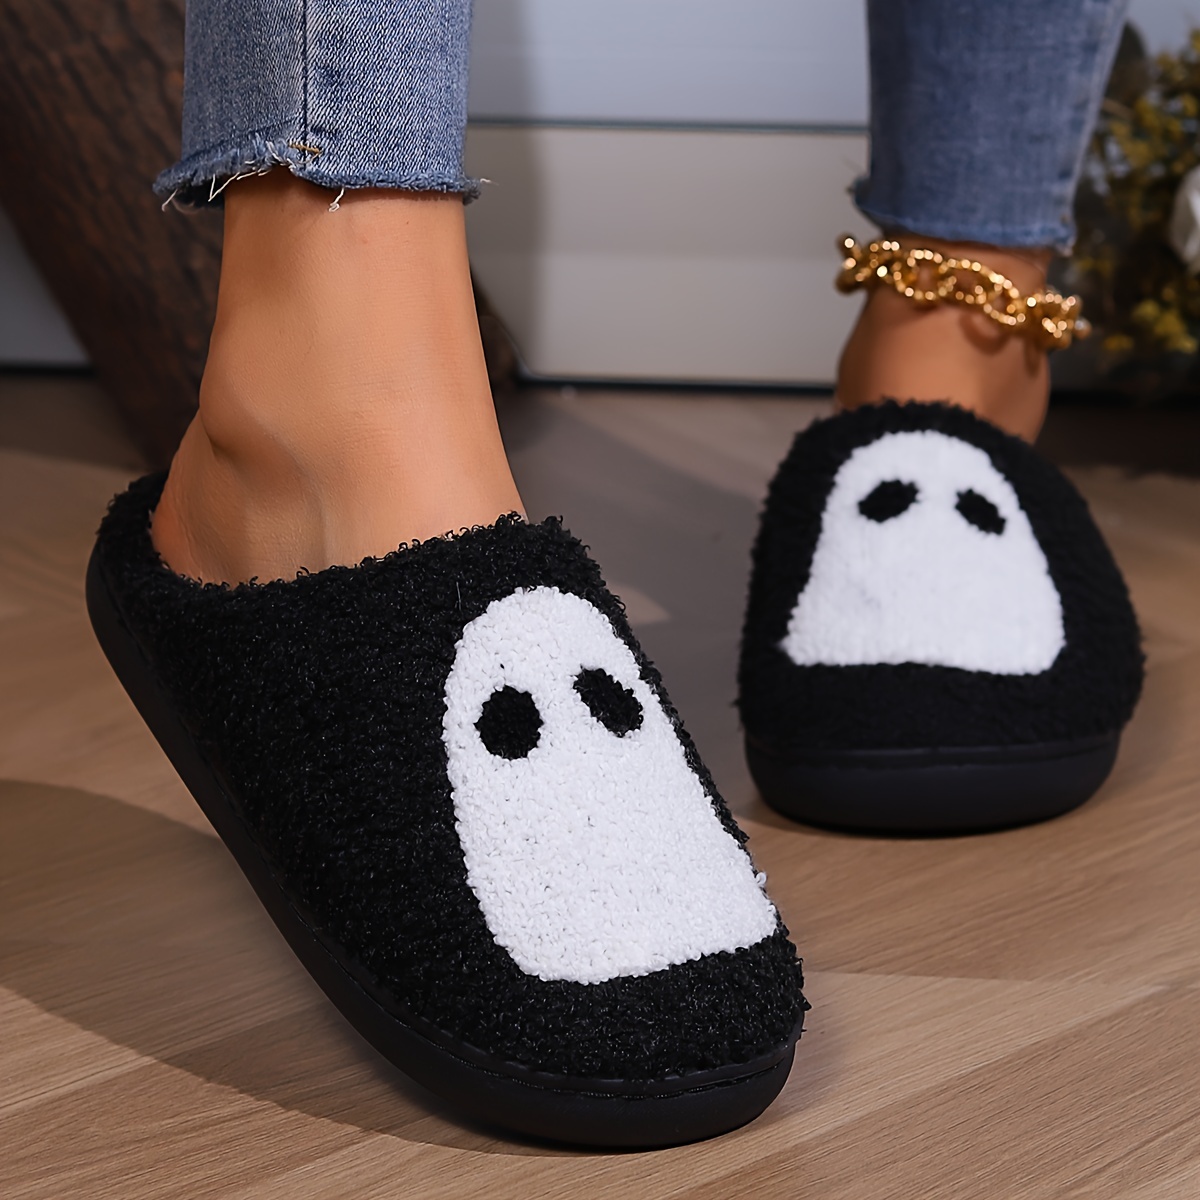 Kawaii Halloween Design Slippers, Casual Slip On Home Shoes